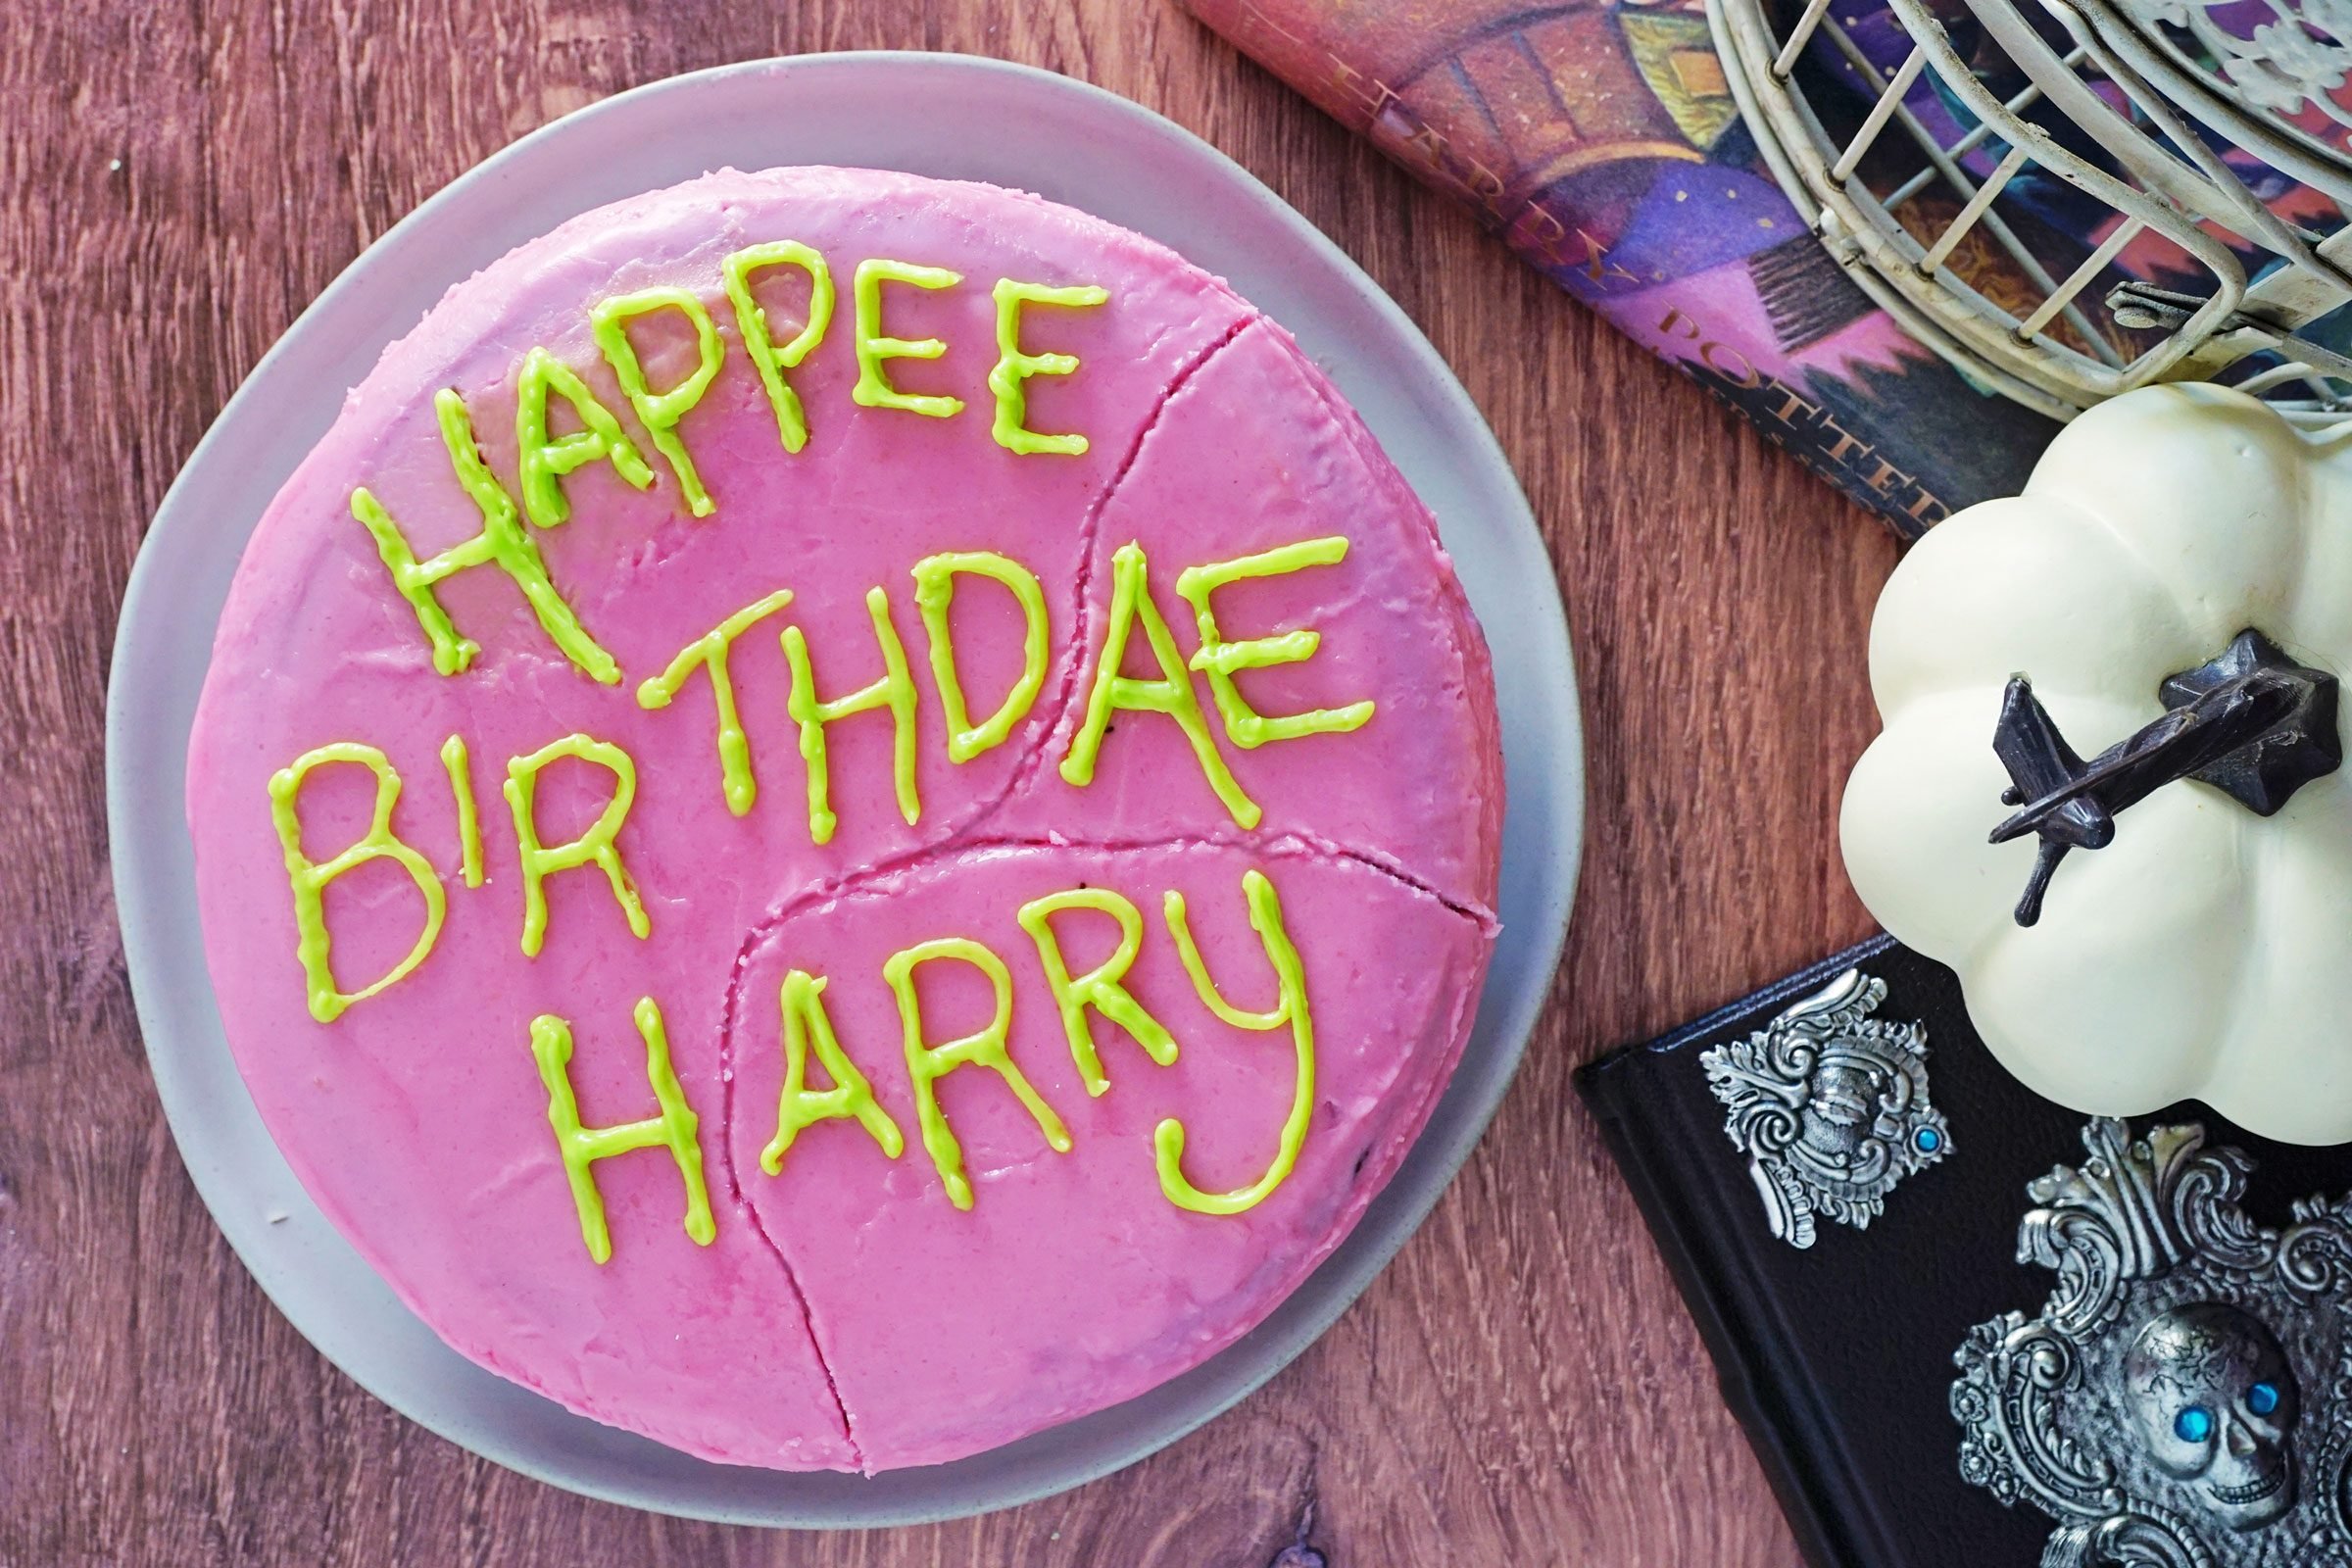 Harry Potter Birthday cake  Harry potter cake, Harry potter birthday, Harry  potter birthday cake